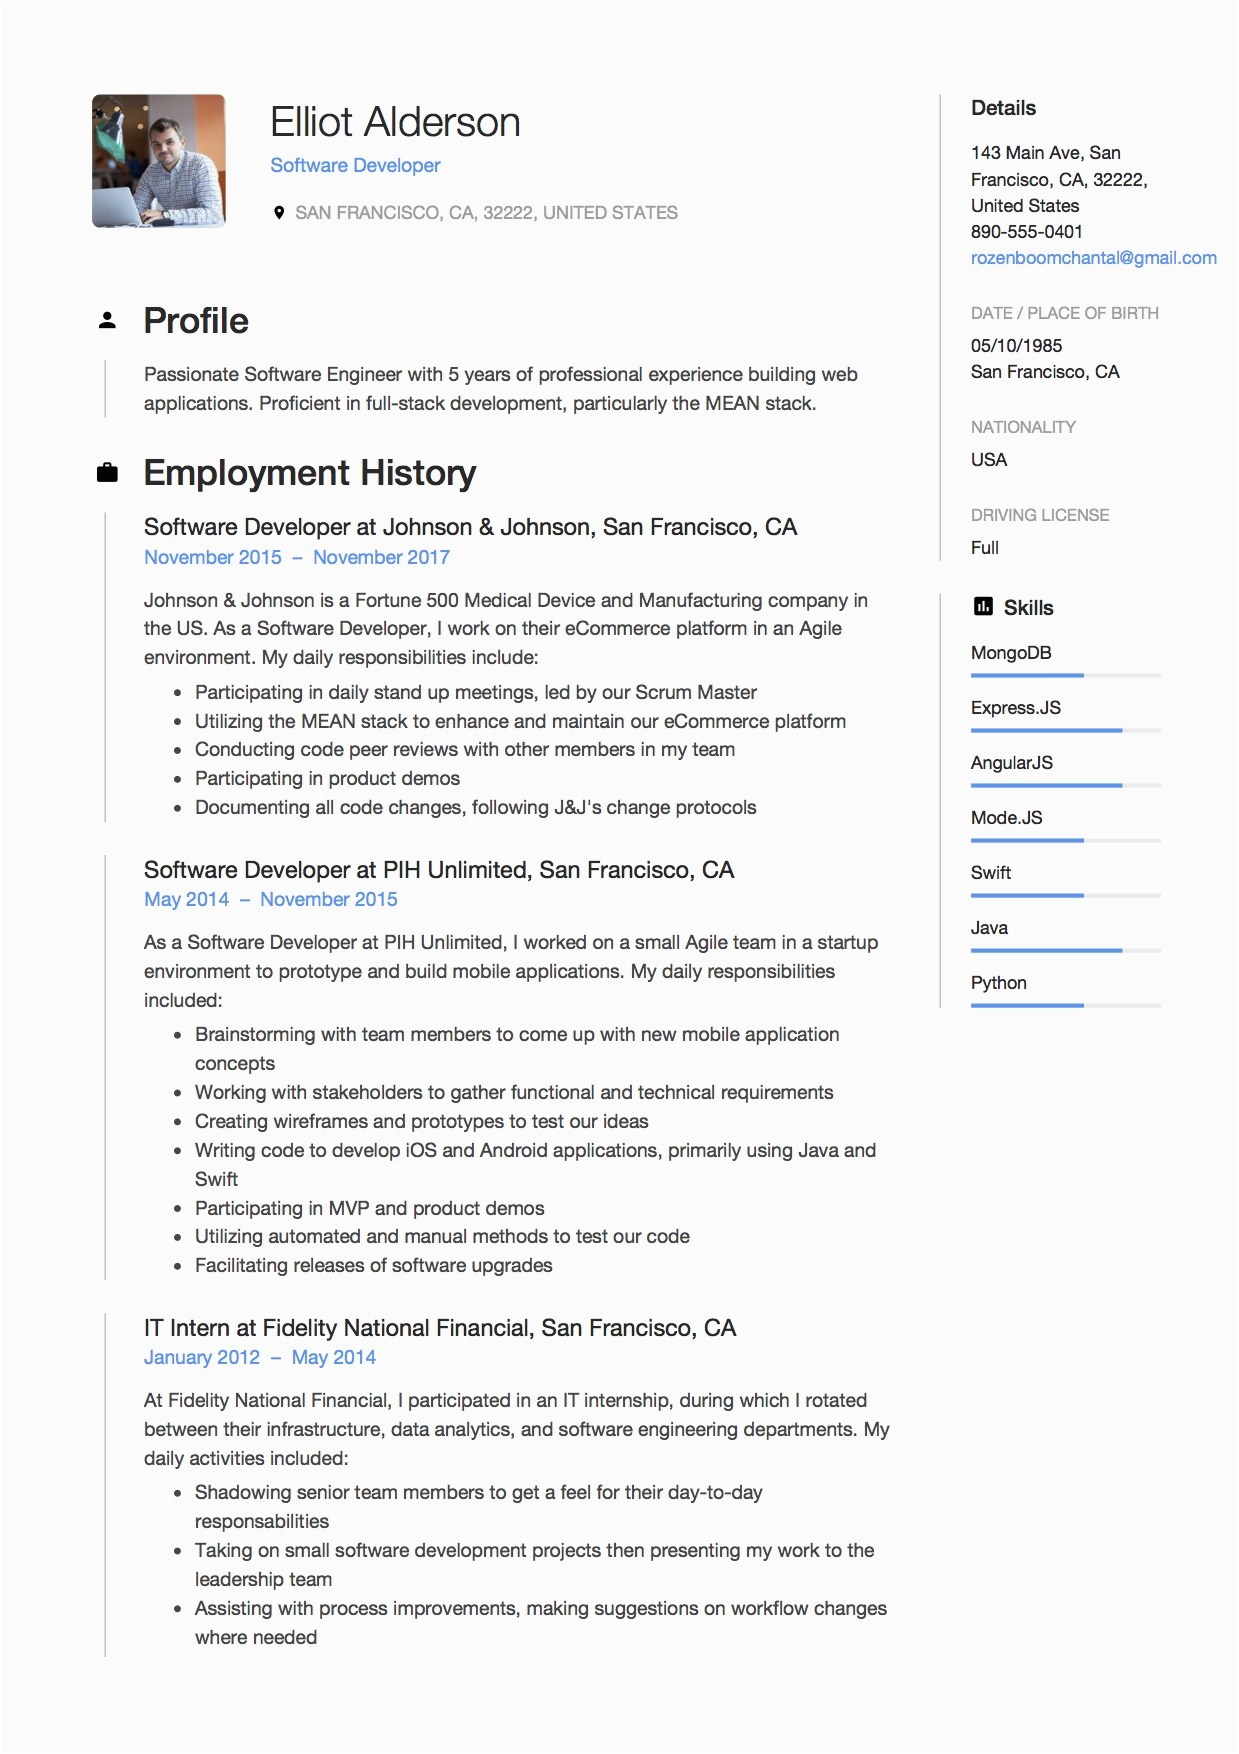 Software Developer Job Description Resume Sample Guide software Developer Resume [ 12 Samples] Word & Pdf